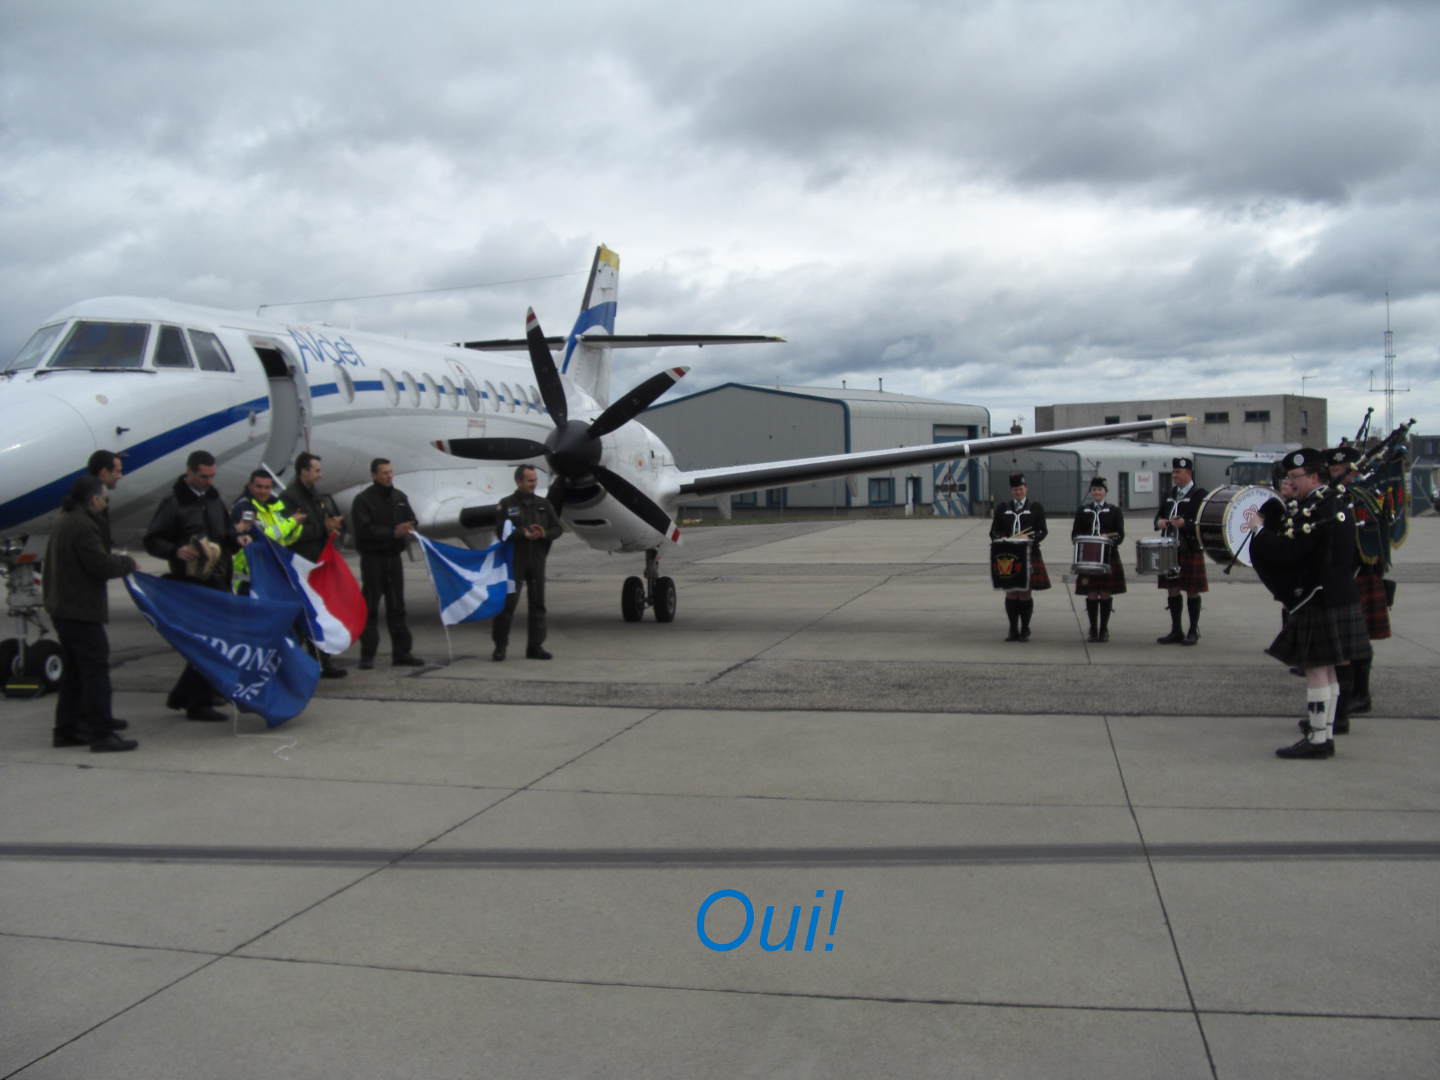 AVDEF aircraft arriving in Aberdeen.